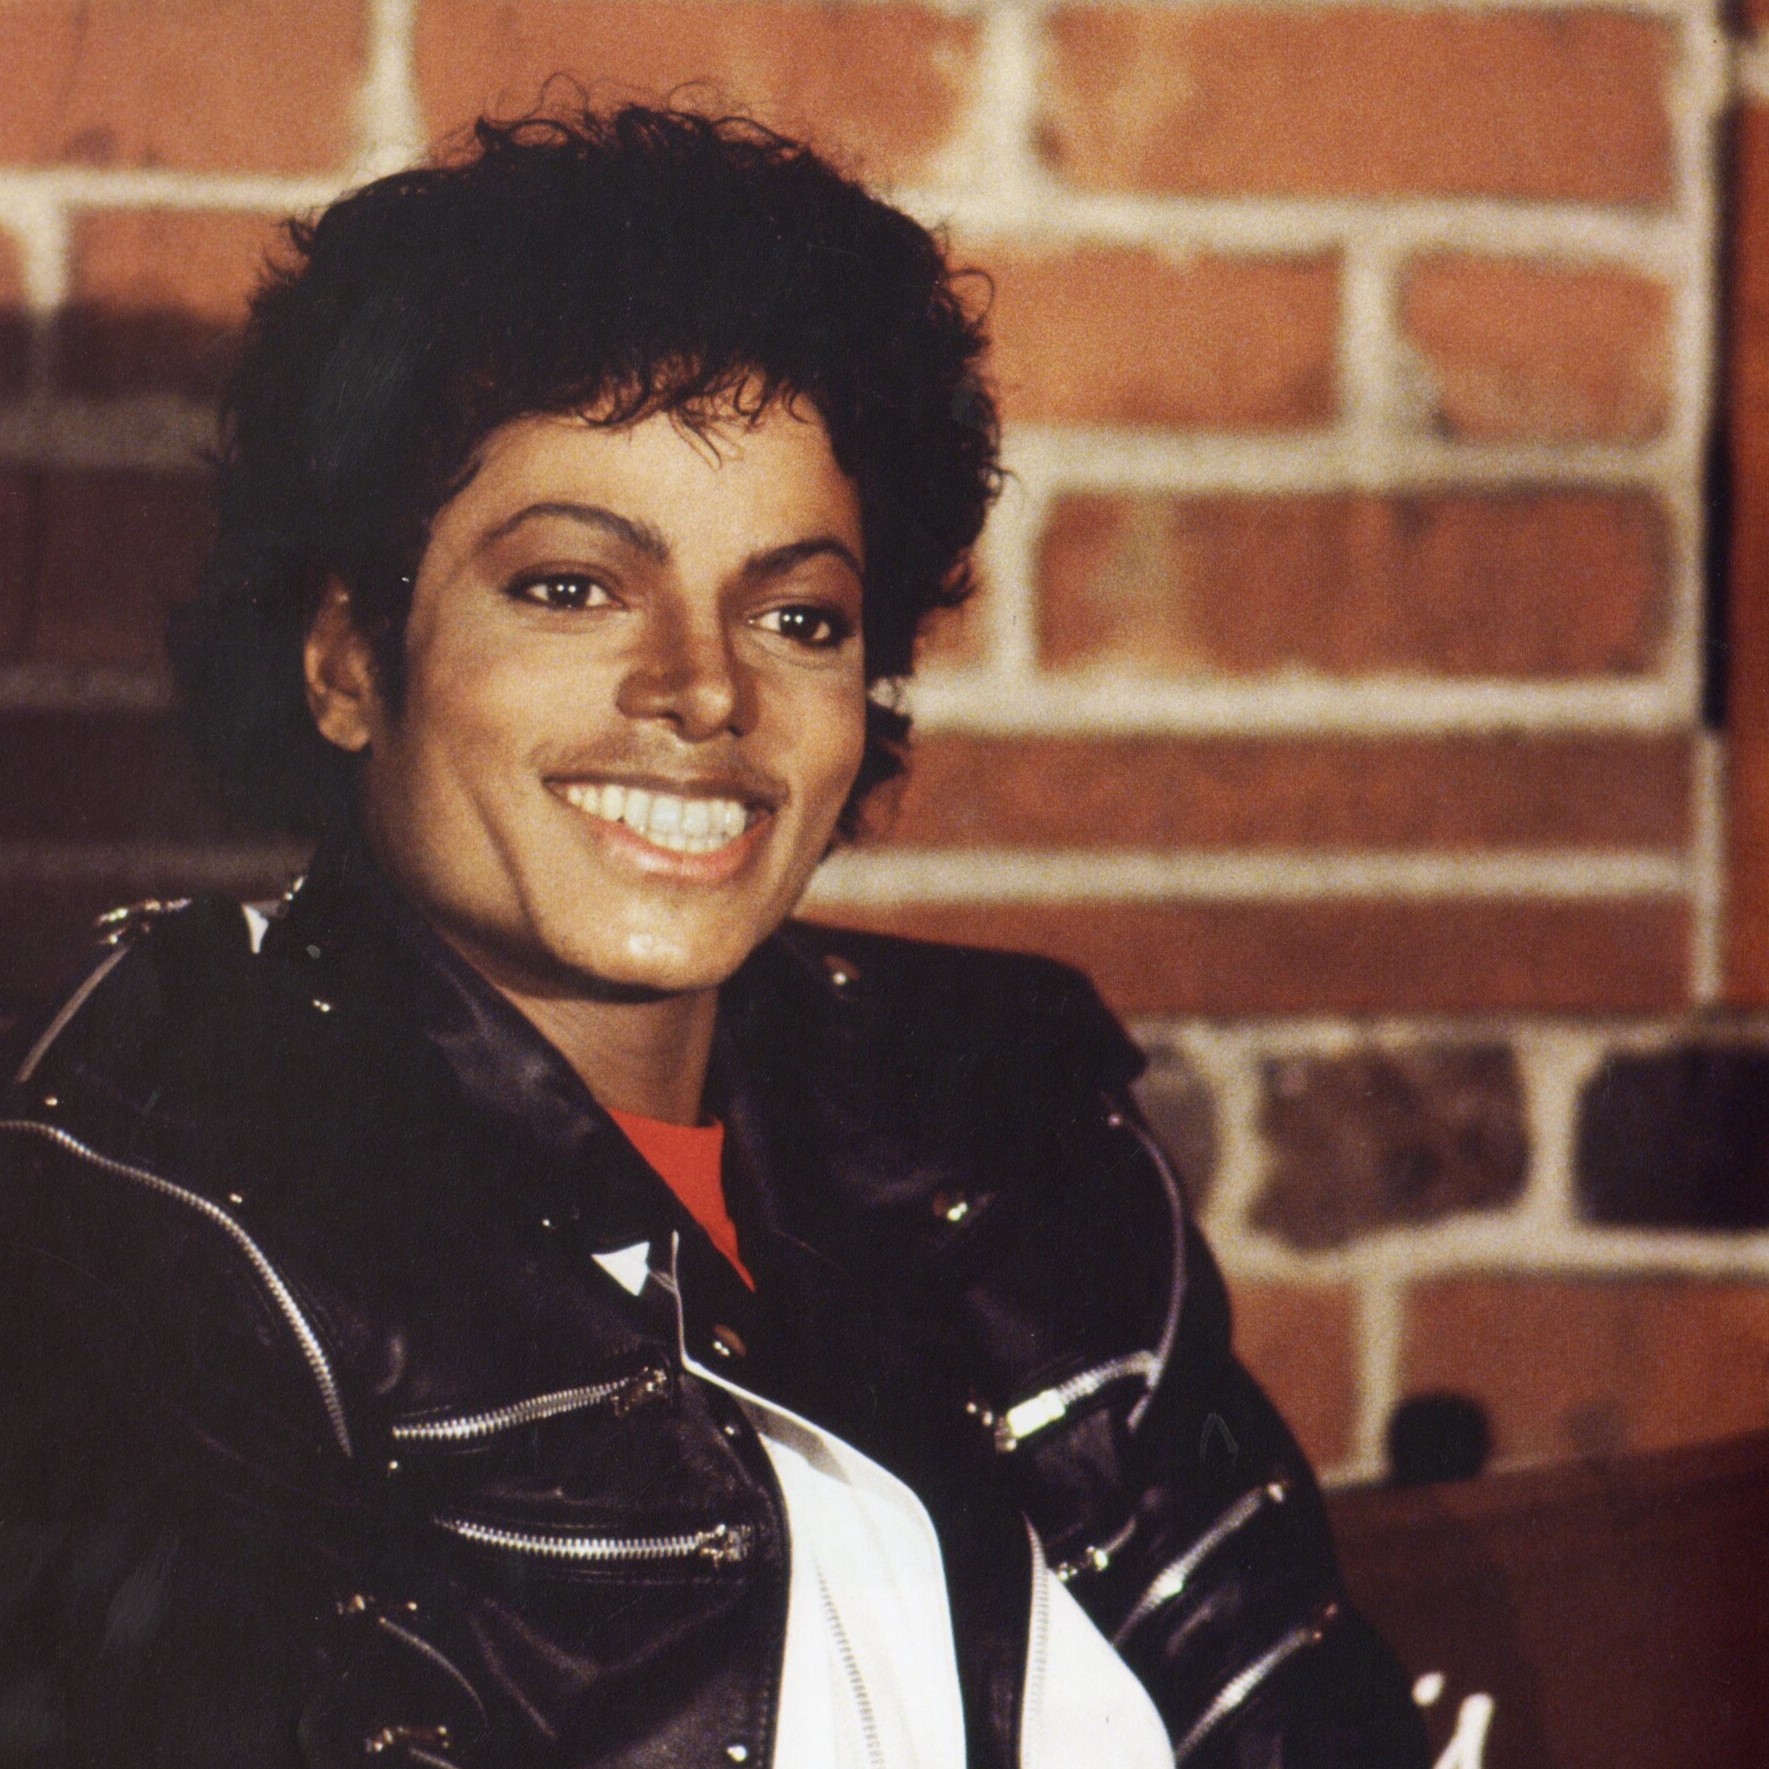 Michael Jackson wearing the leather jacket